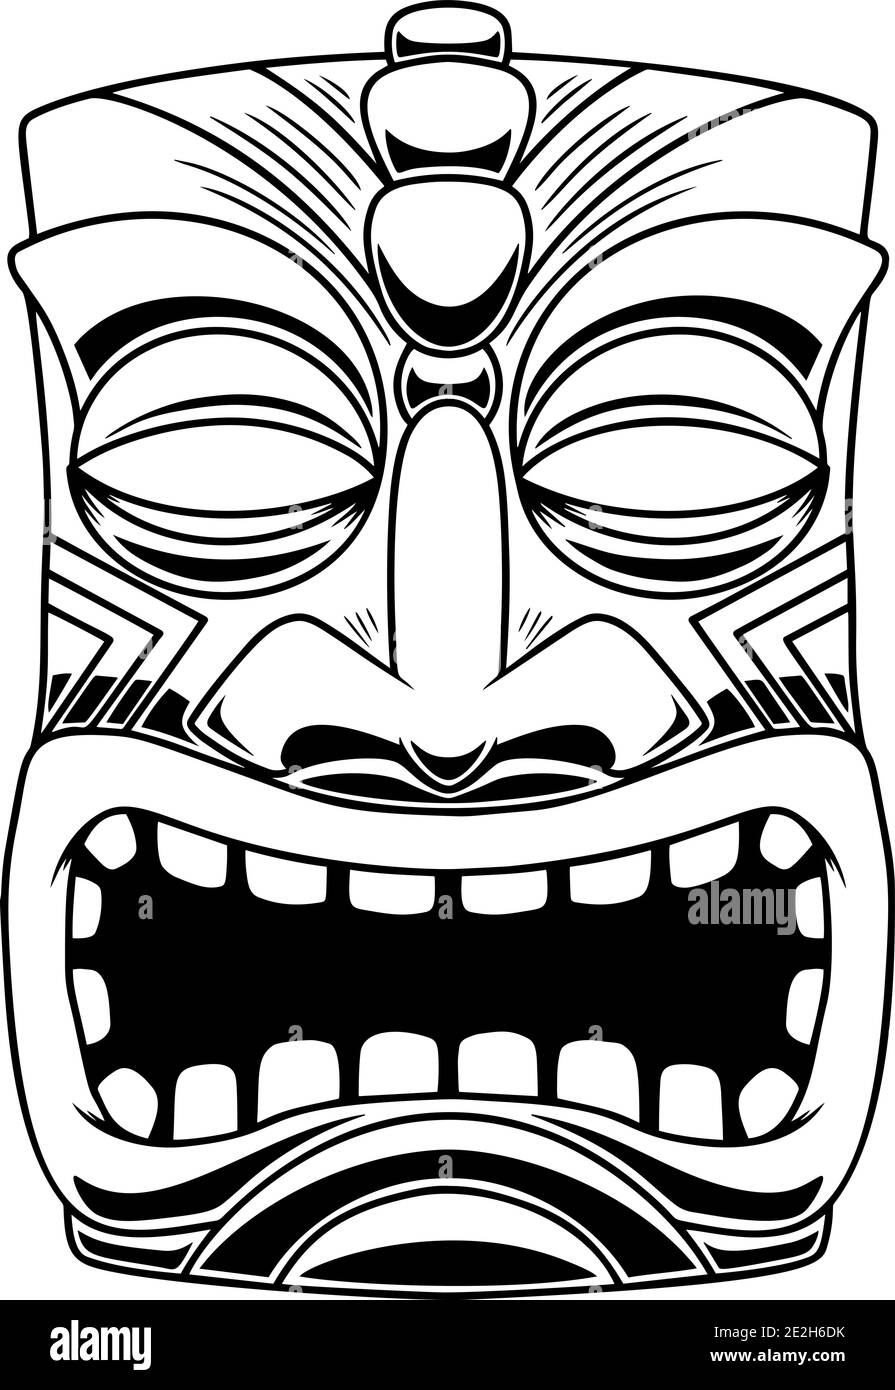 Illustration der Tiki Tribal Holzmaske. Gestaltungselement für Logo, Emblem, Schild, Plakat, Karte, Banner. Vektorgrafik Stock Vektor